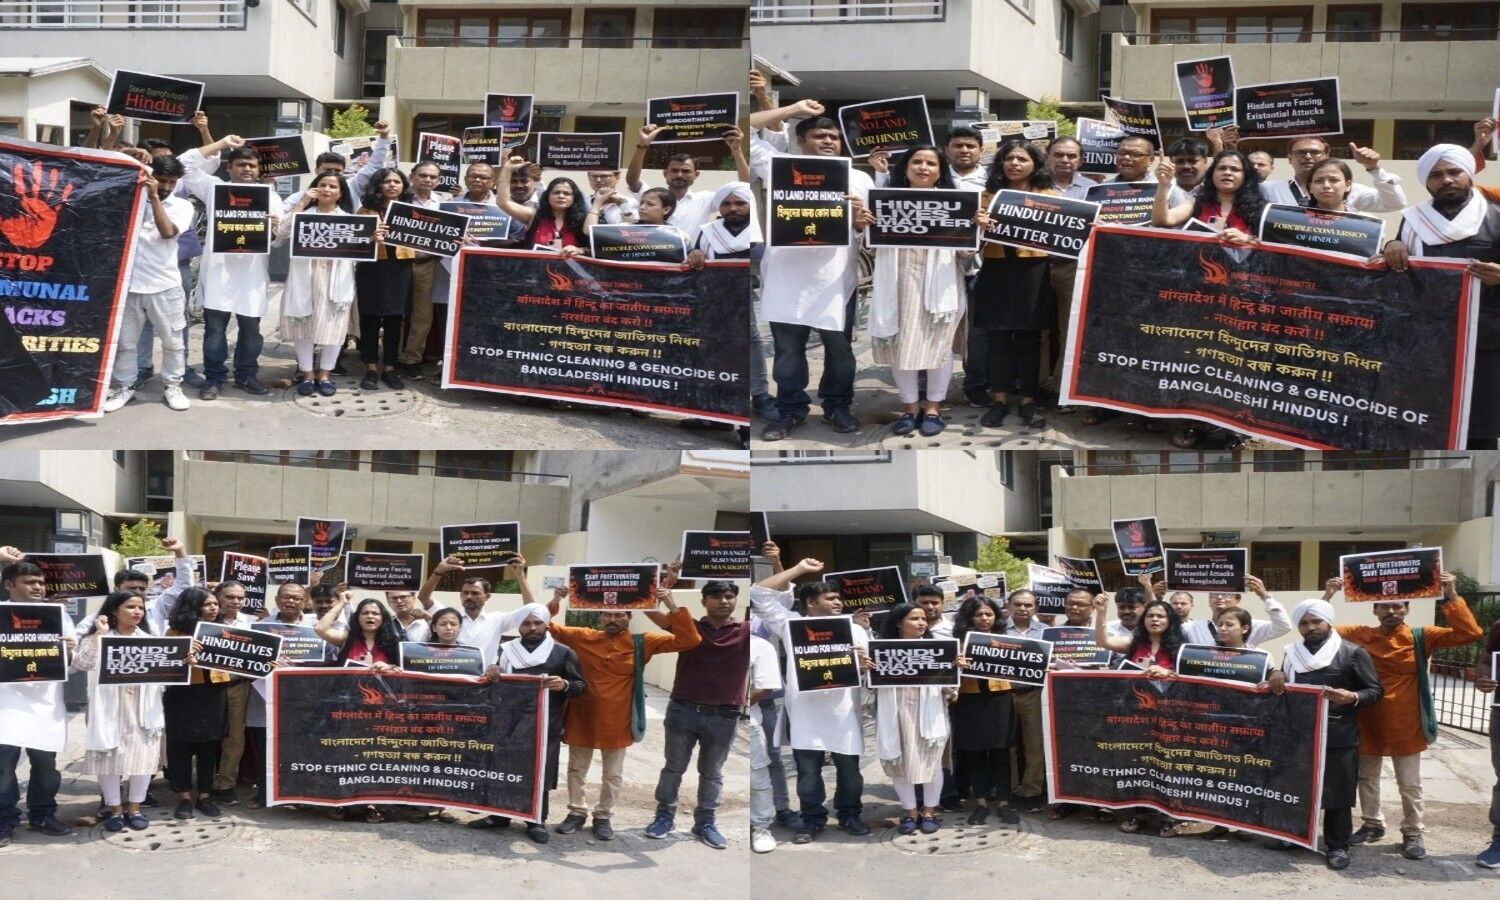 Sheikh Hasina Visit India: Hindu organizations protest against atrocities on Hindus in Bangladesh